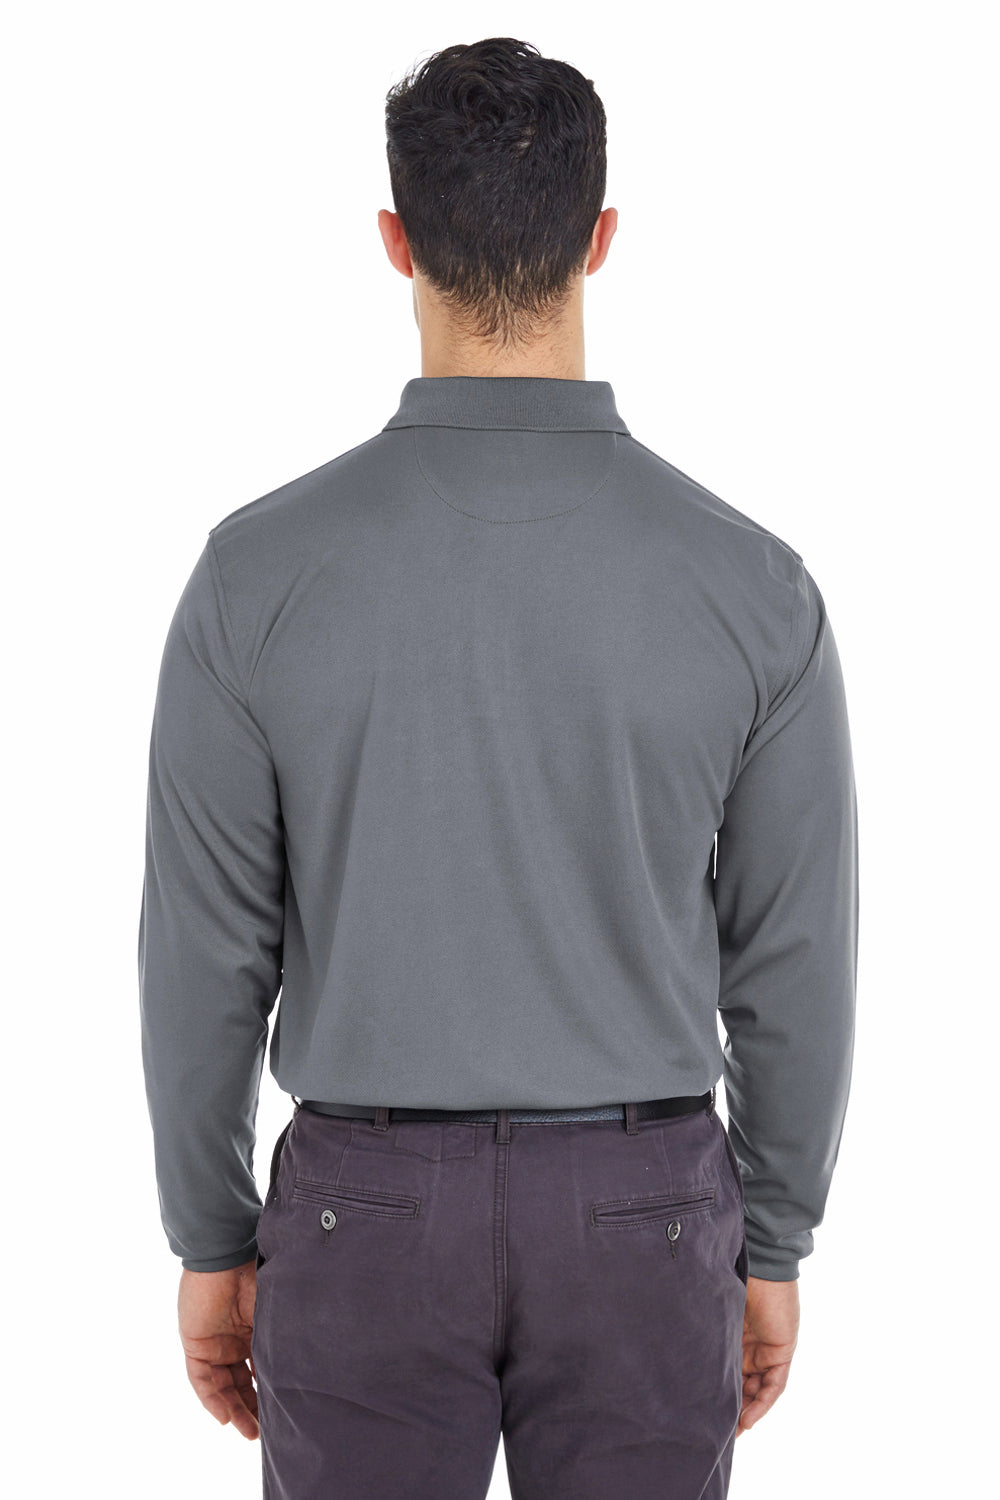 UltraClub 8210LS Mens Cool & Dry Moisture Wicking Long Sleeve Polo Shirt Charcoal Grey Back